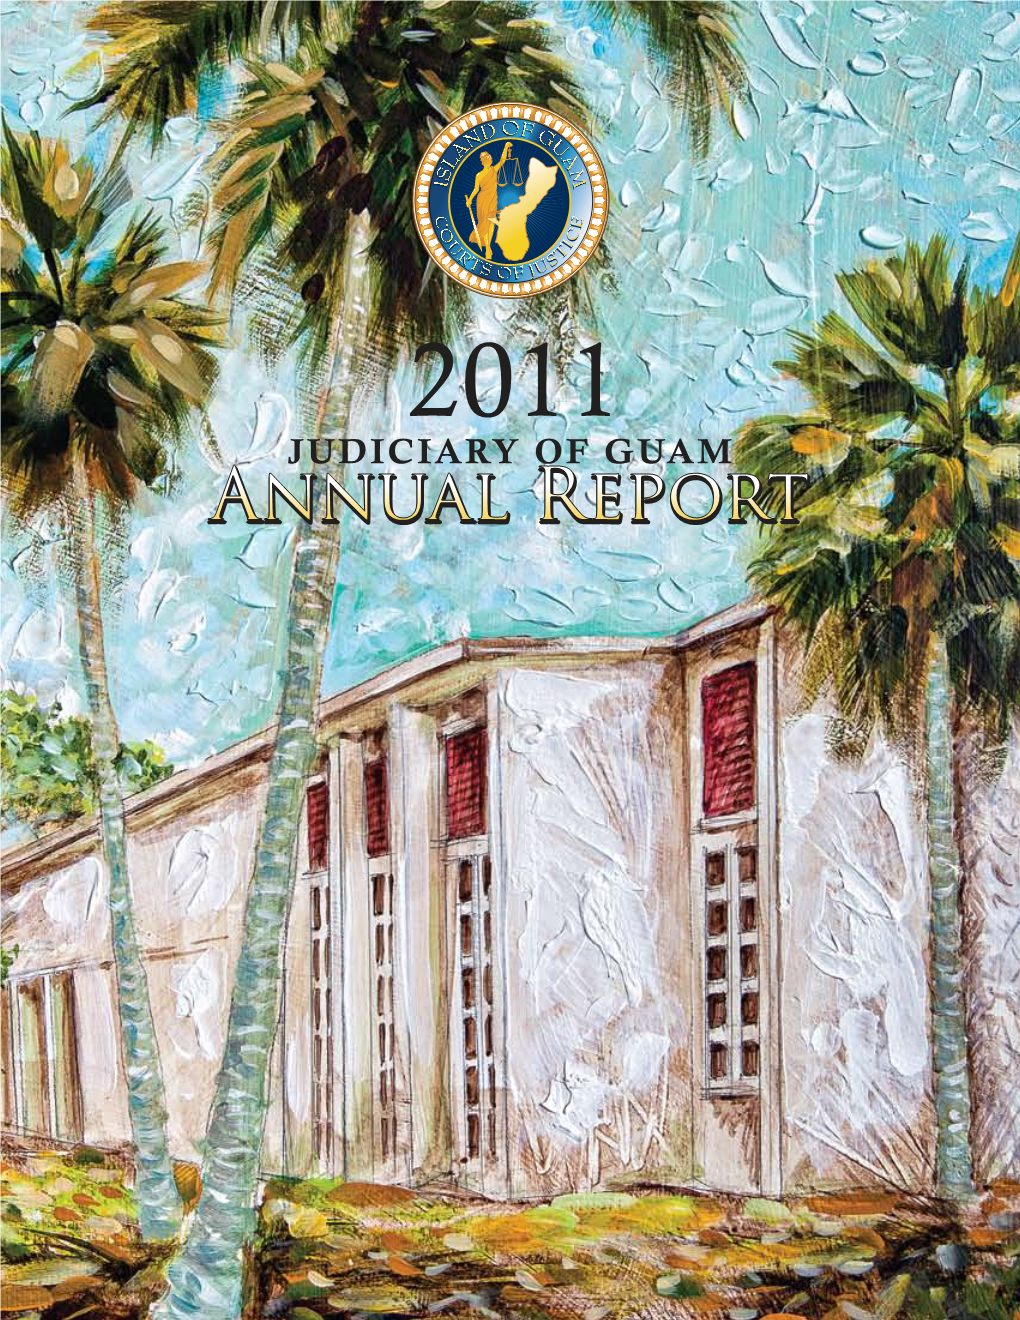 2011 Annual Report of the Judiciary of Guam